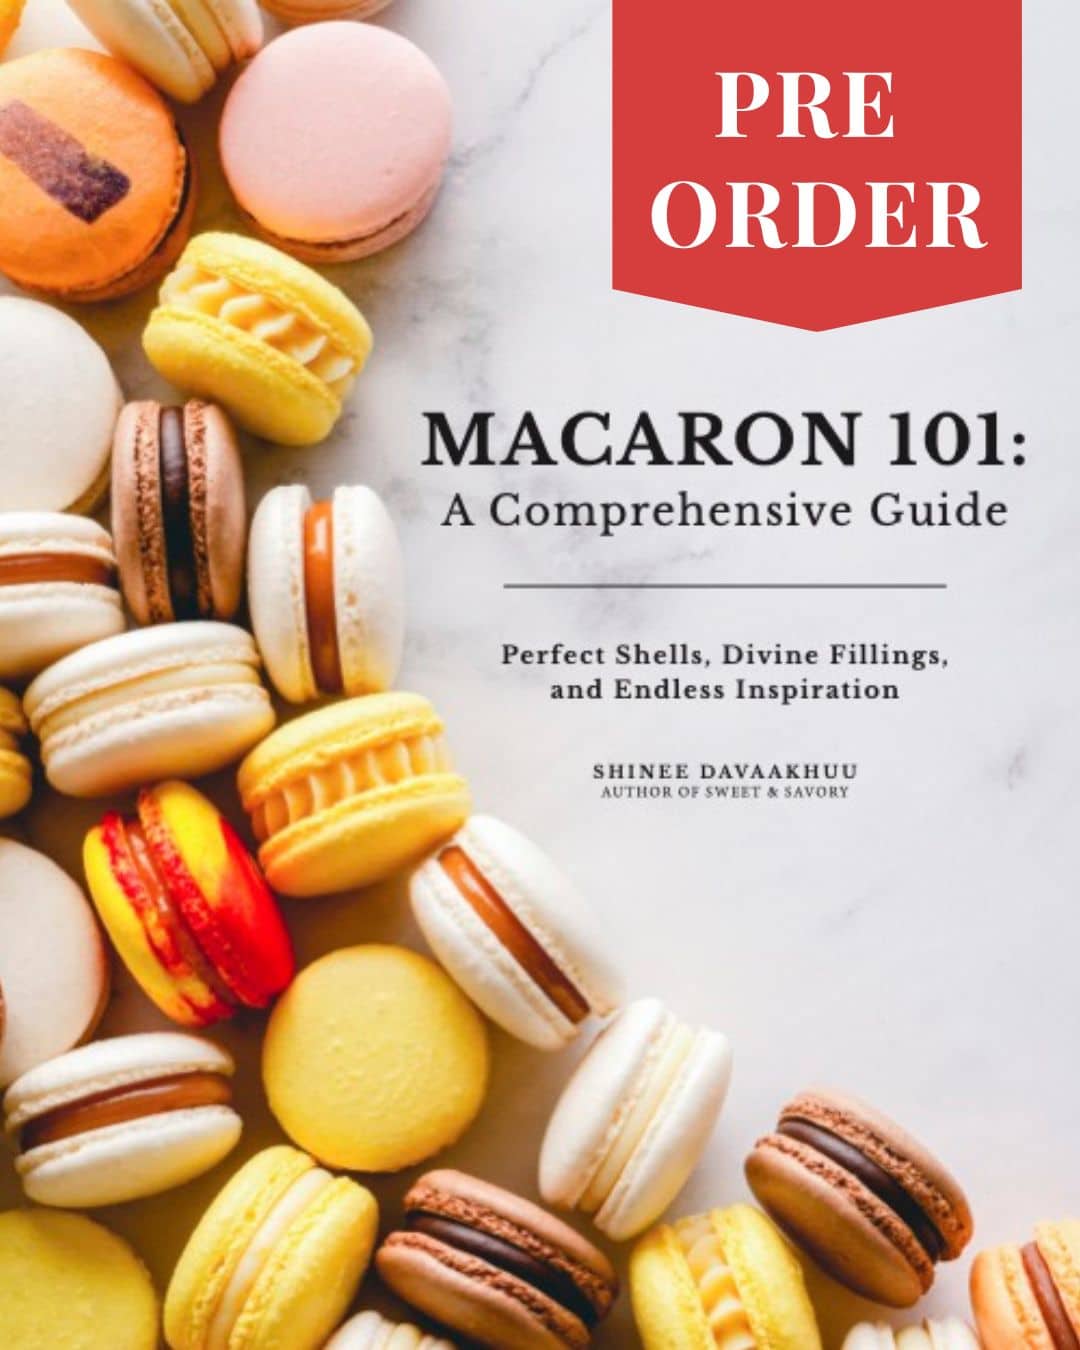 Macaron 101: A Comprehensive Guide cookbook cover